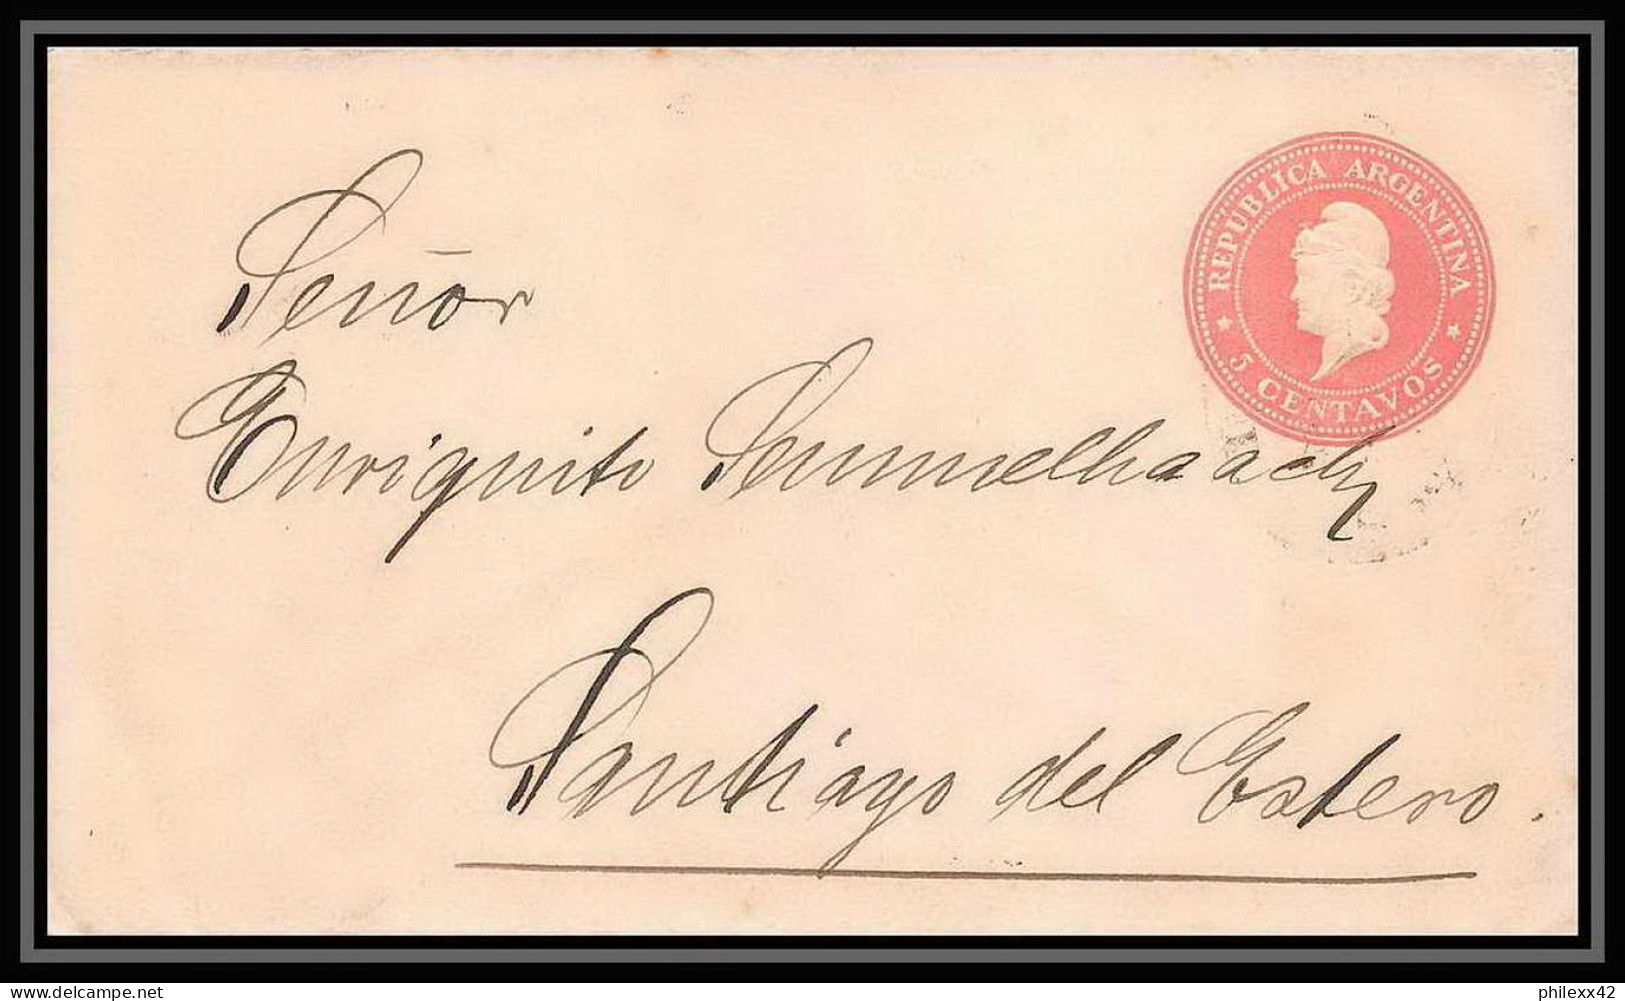 4155/ Argentine (Argentina) Entier Stationery Enveloppe (cover) N°13 1900 - Enteros Postales